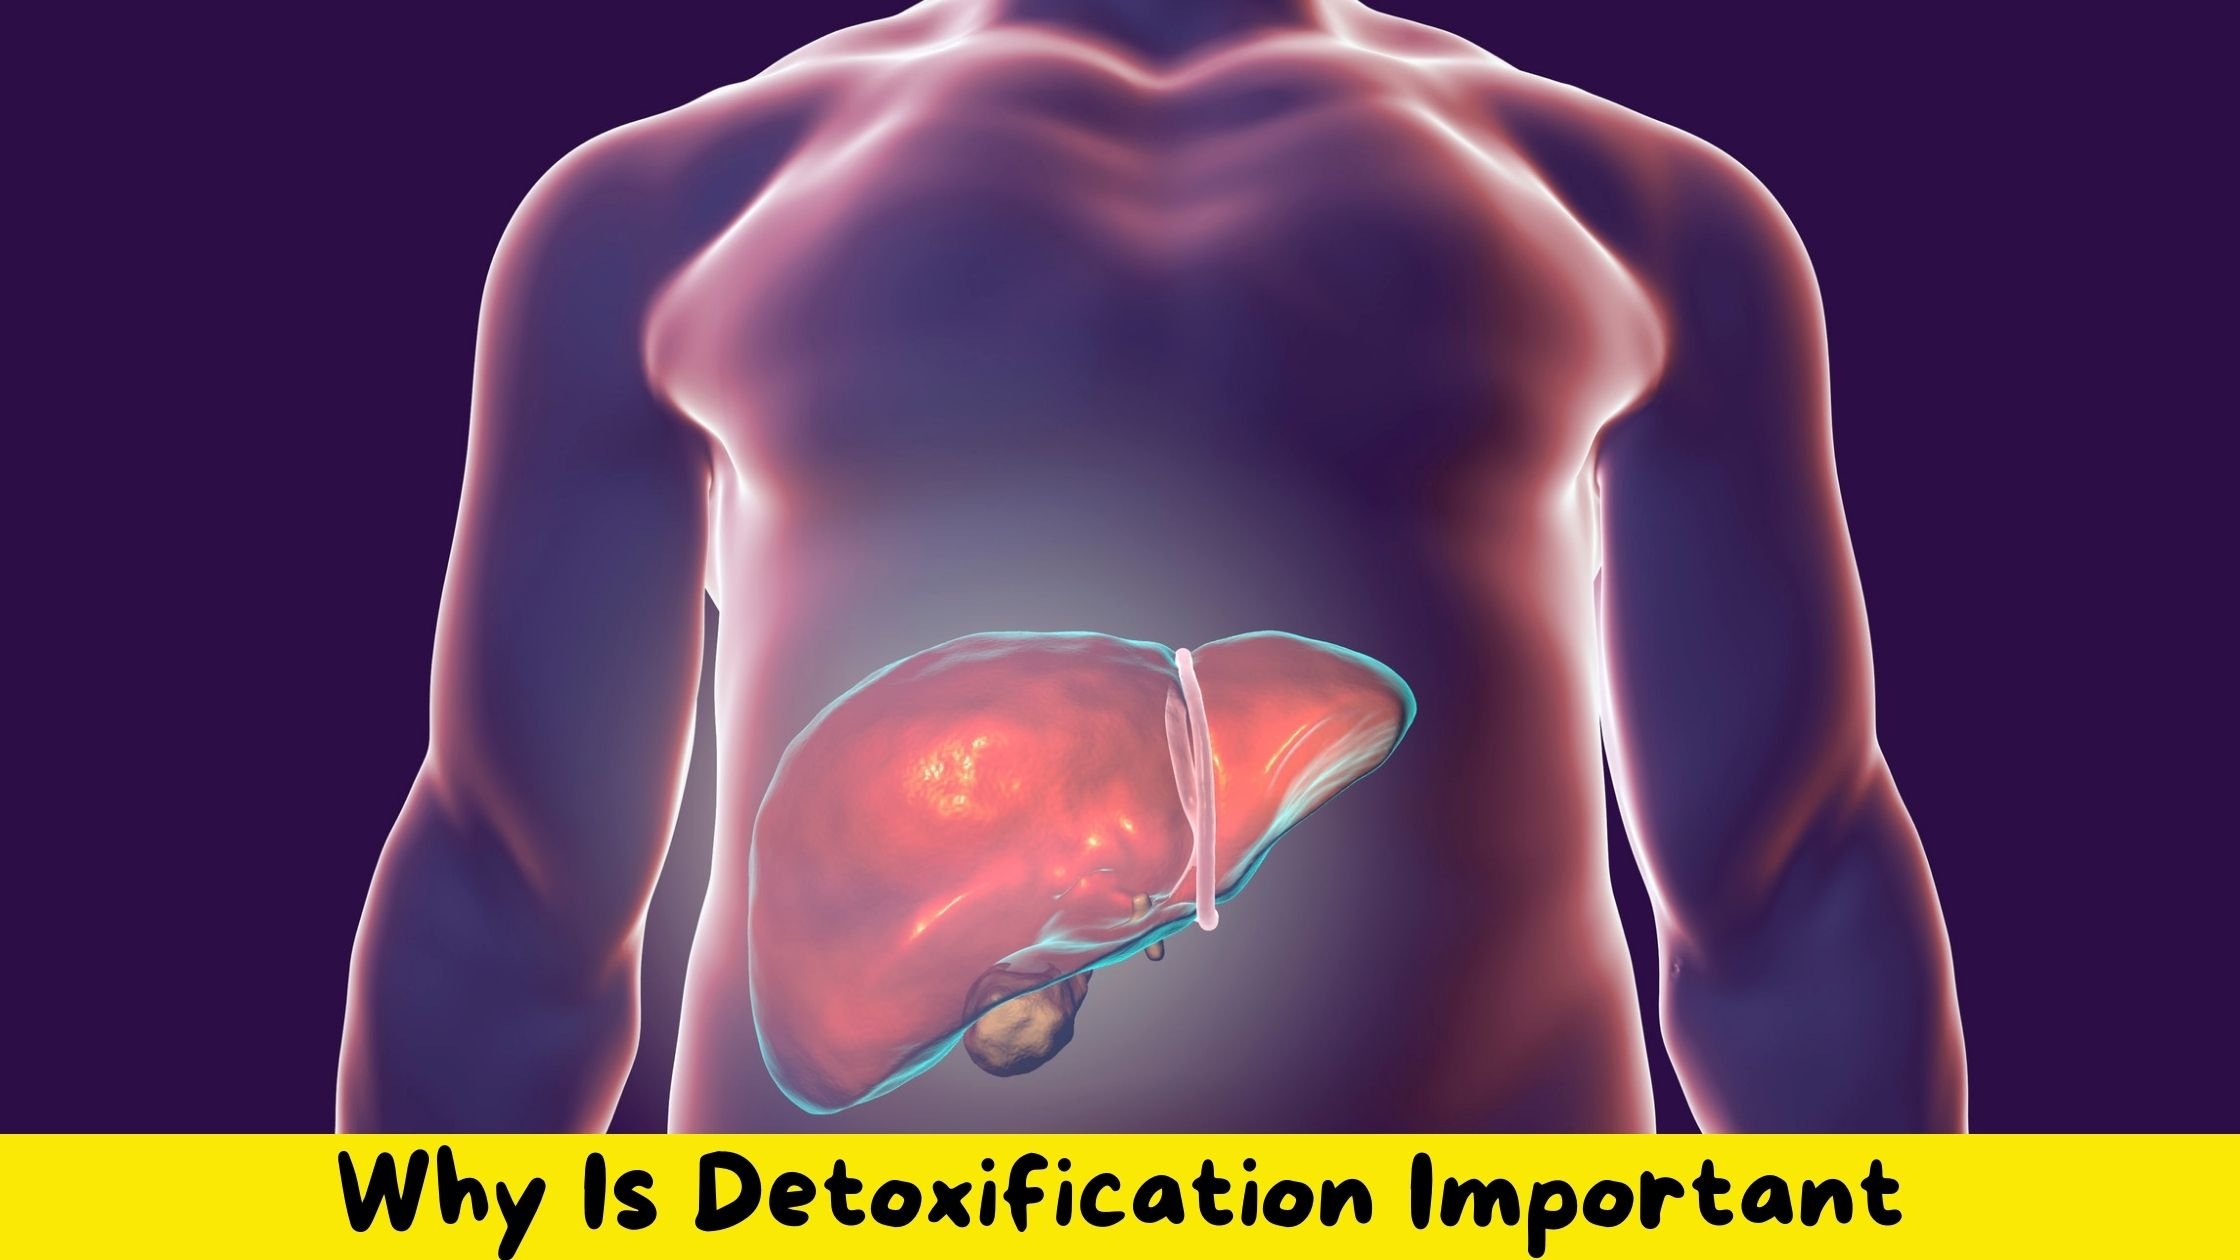 Detoxification: Why is detoxification important